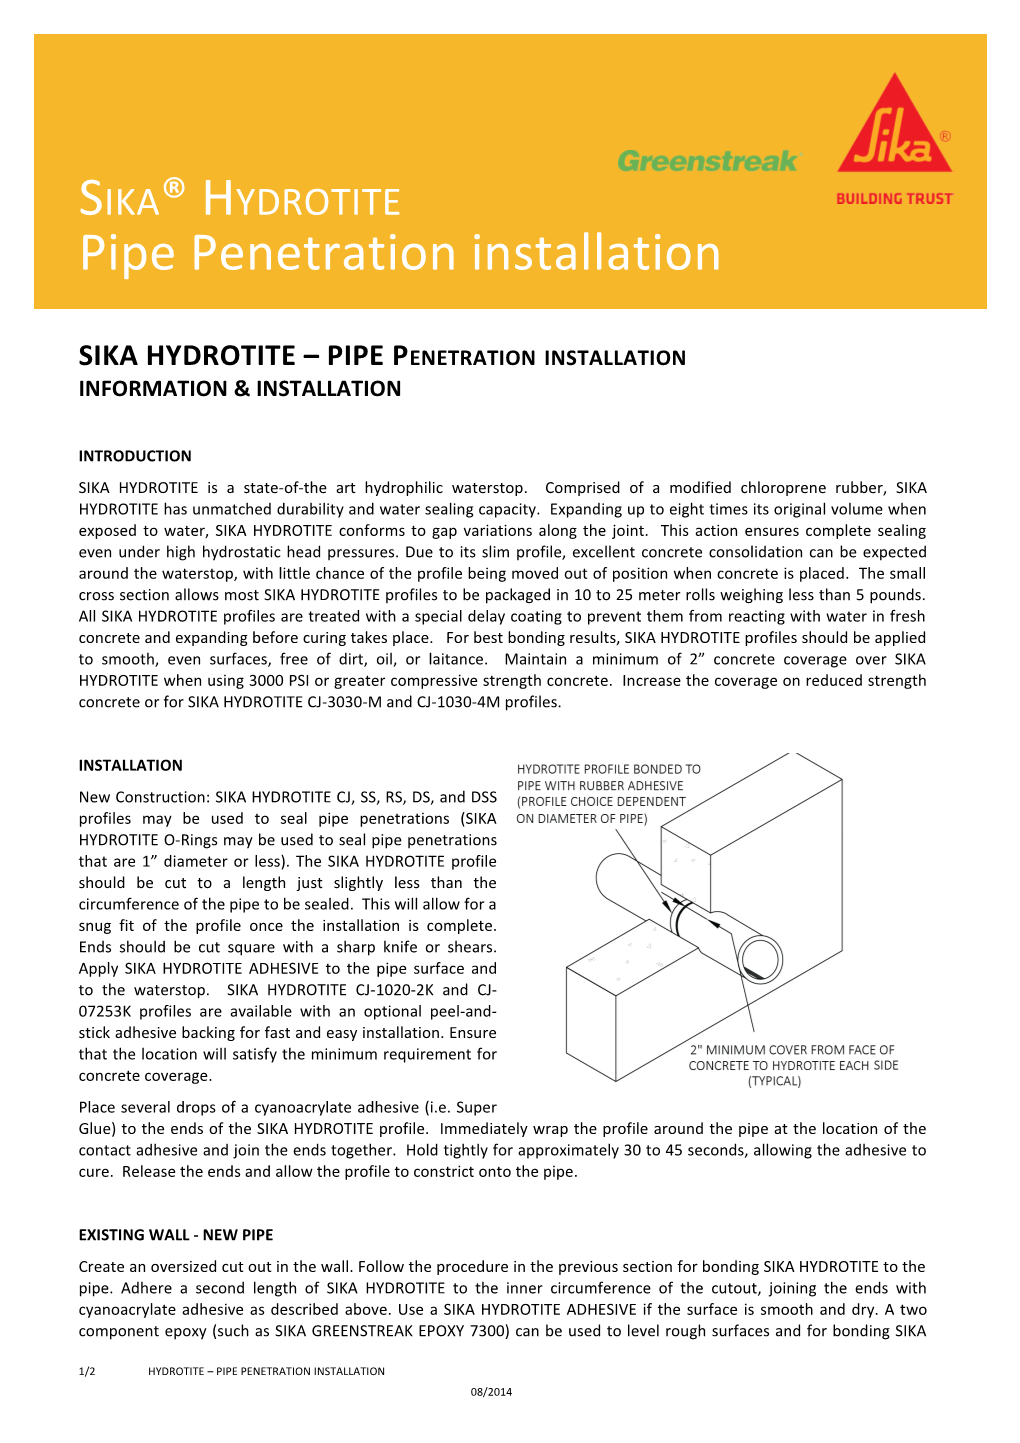 SIKA HYDROTITE PIPE Penetration Installation